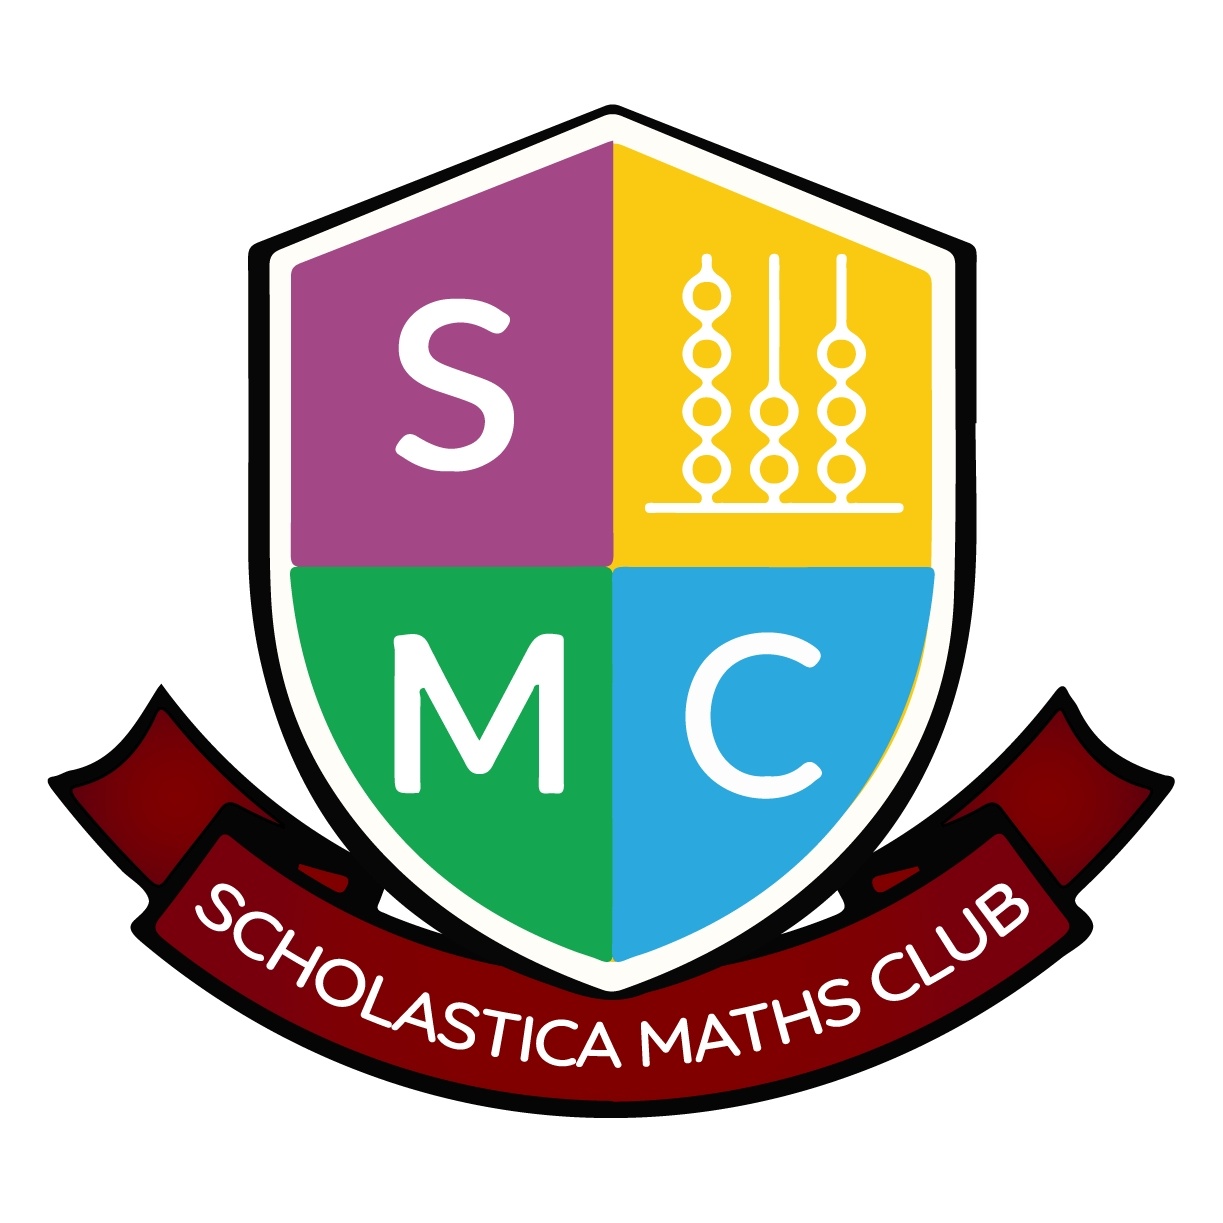 scholastica mathematics club logo